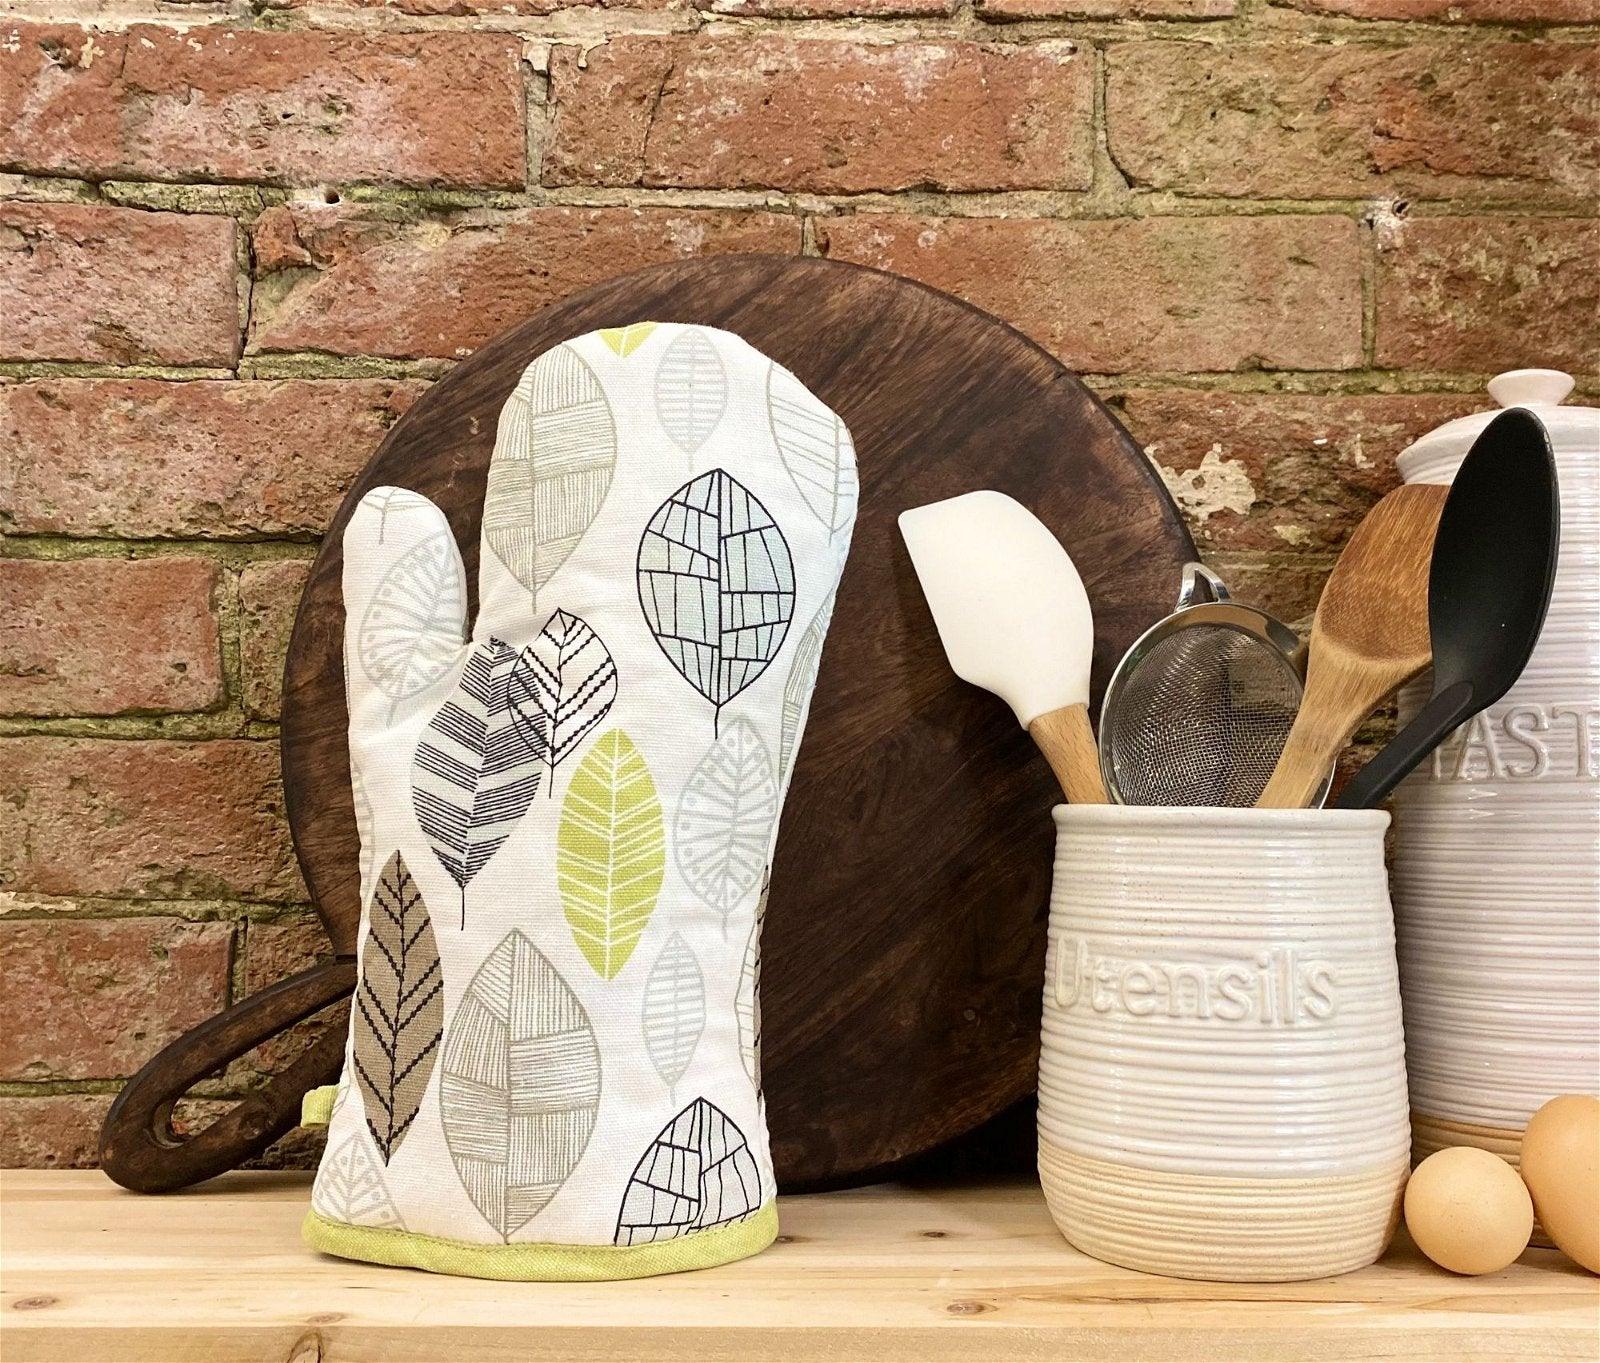 Kitchen Oven Glove With Contemporary Green Leaf Print Design - £15.99 - Decorative Kitchen Items 